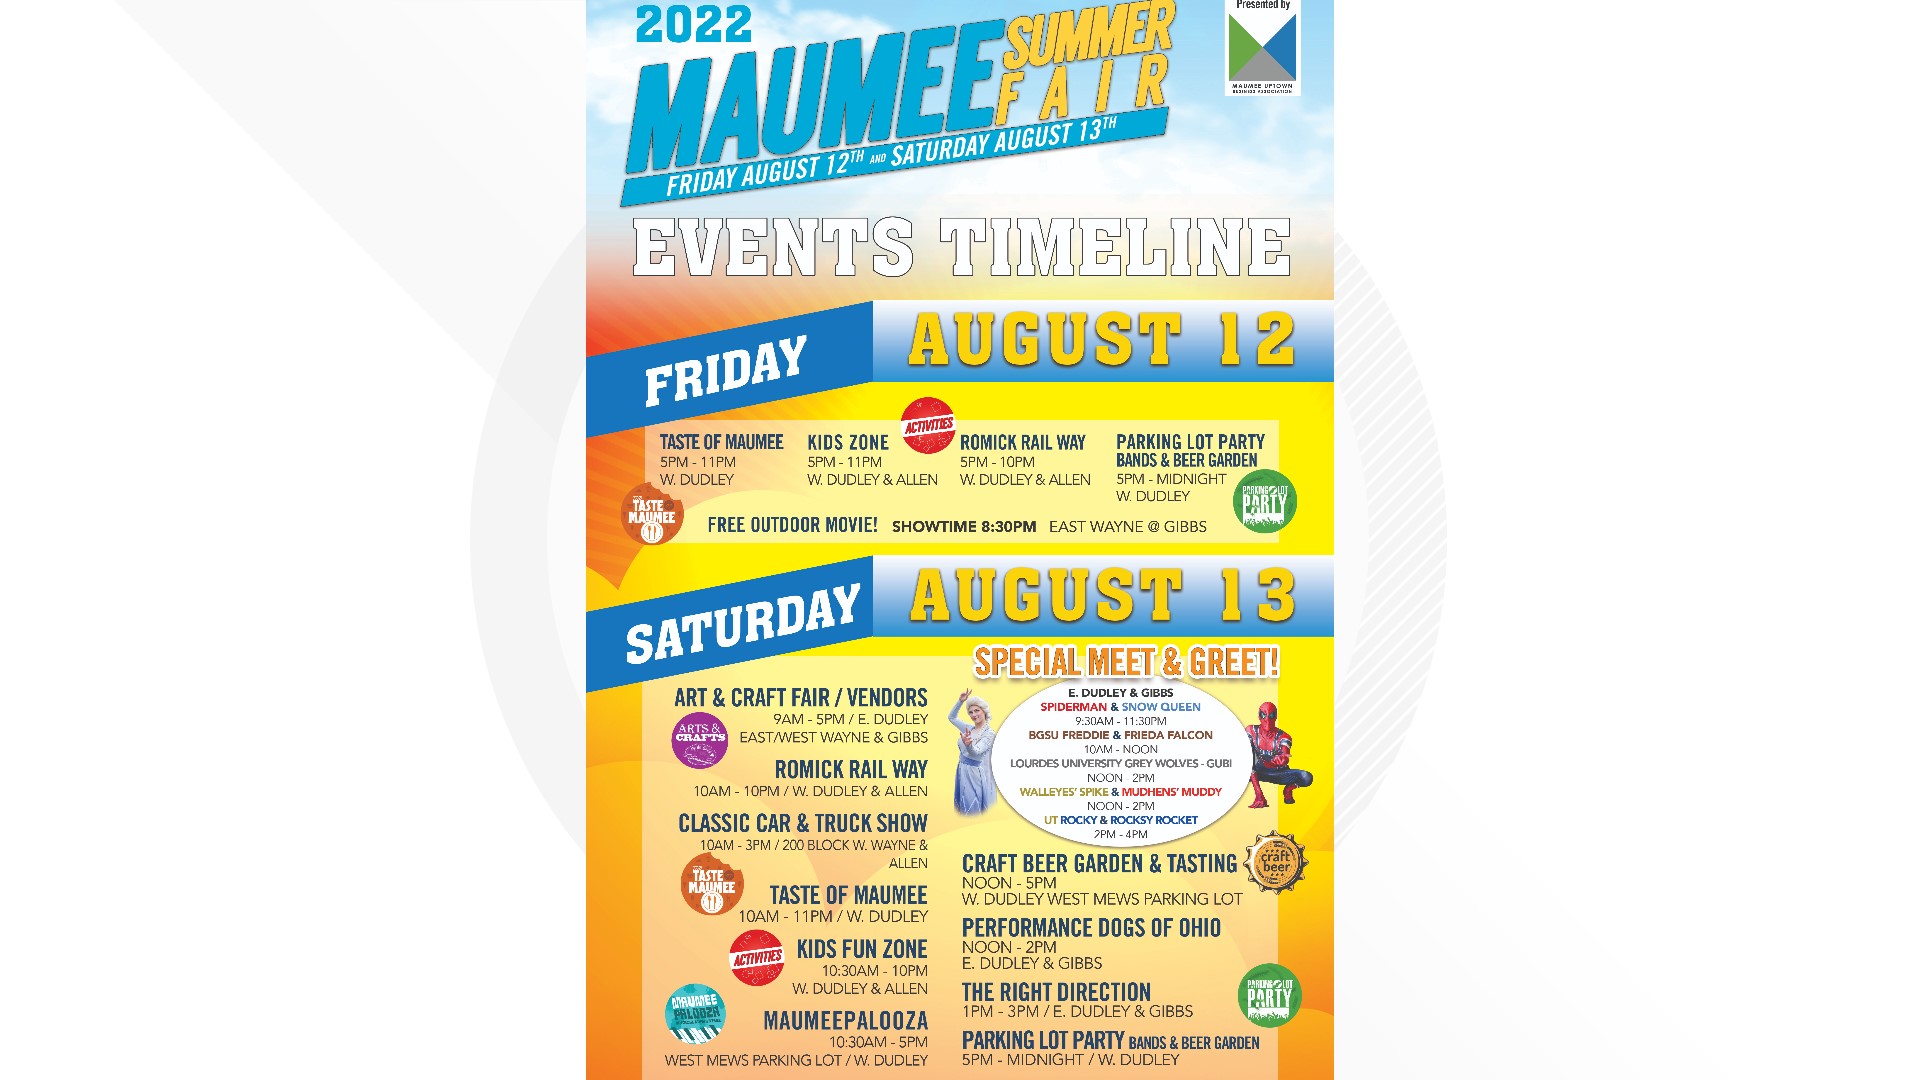 The Maumee Summer Fair returns Aug. 12 and 13